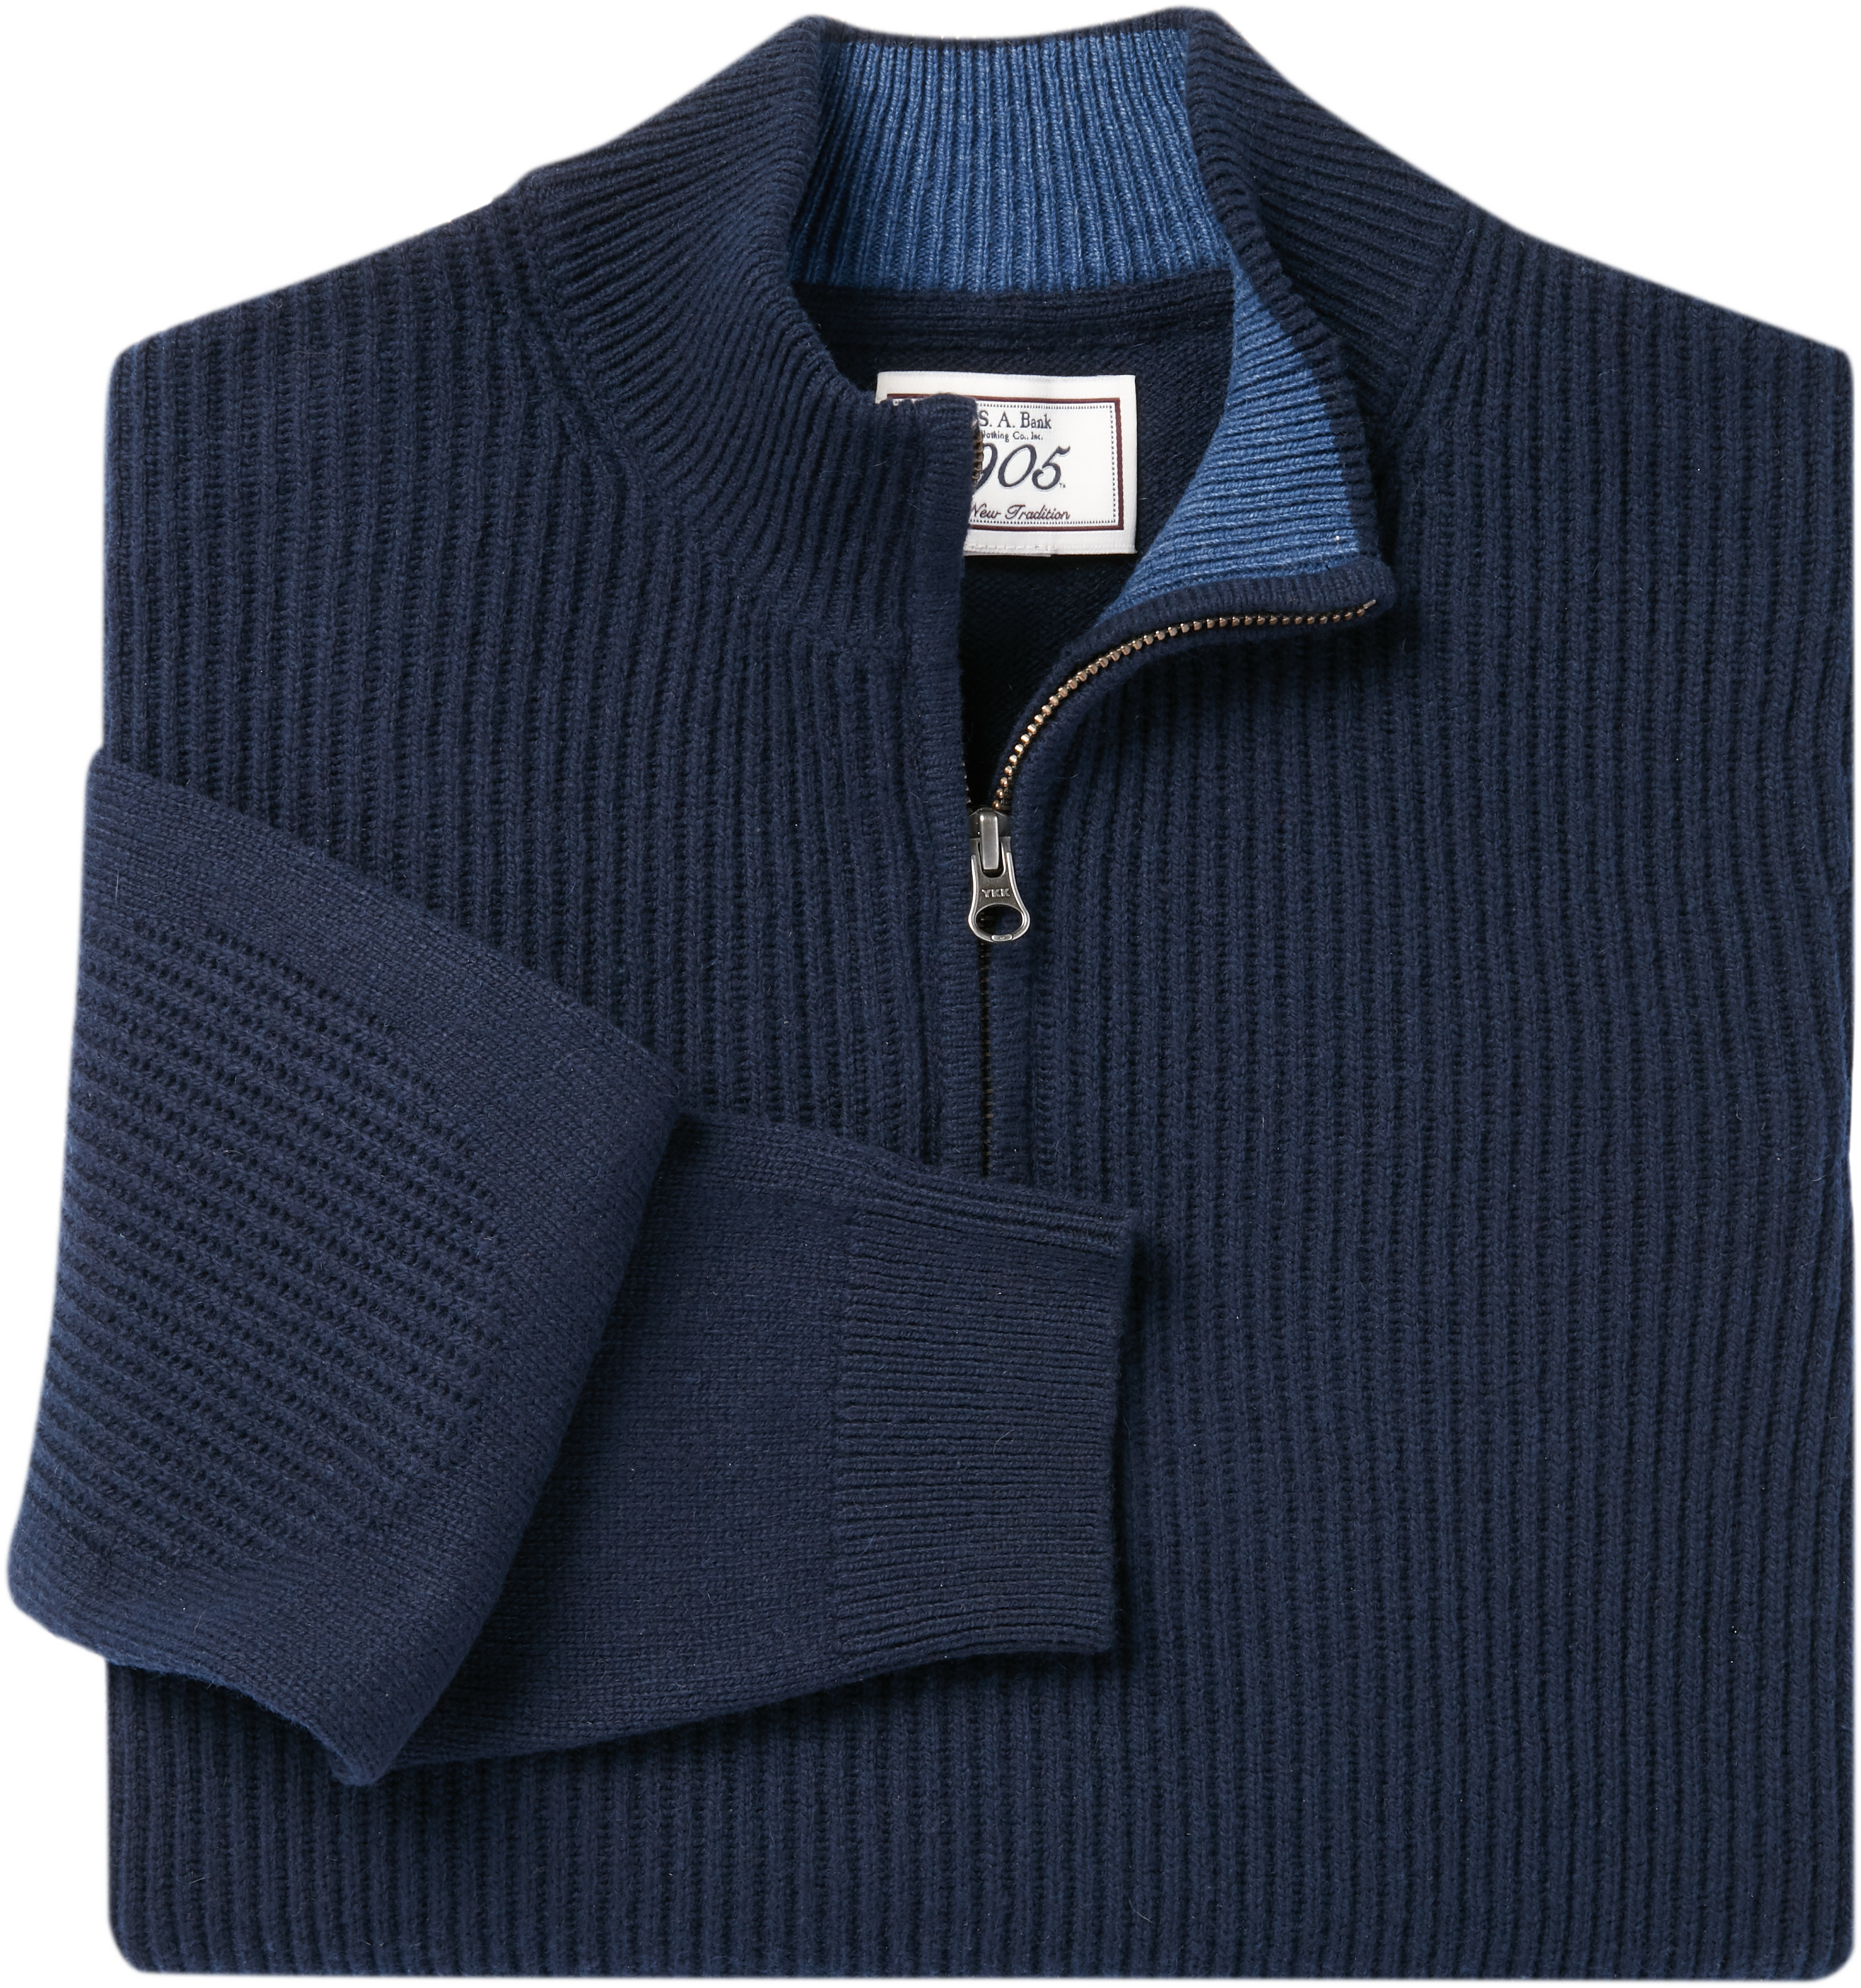 1905 Collection Wool Blend Quarter Zip Mock Neck Sweater - Big & Tall ...